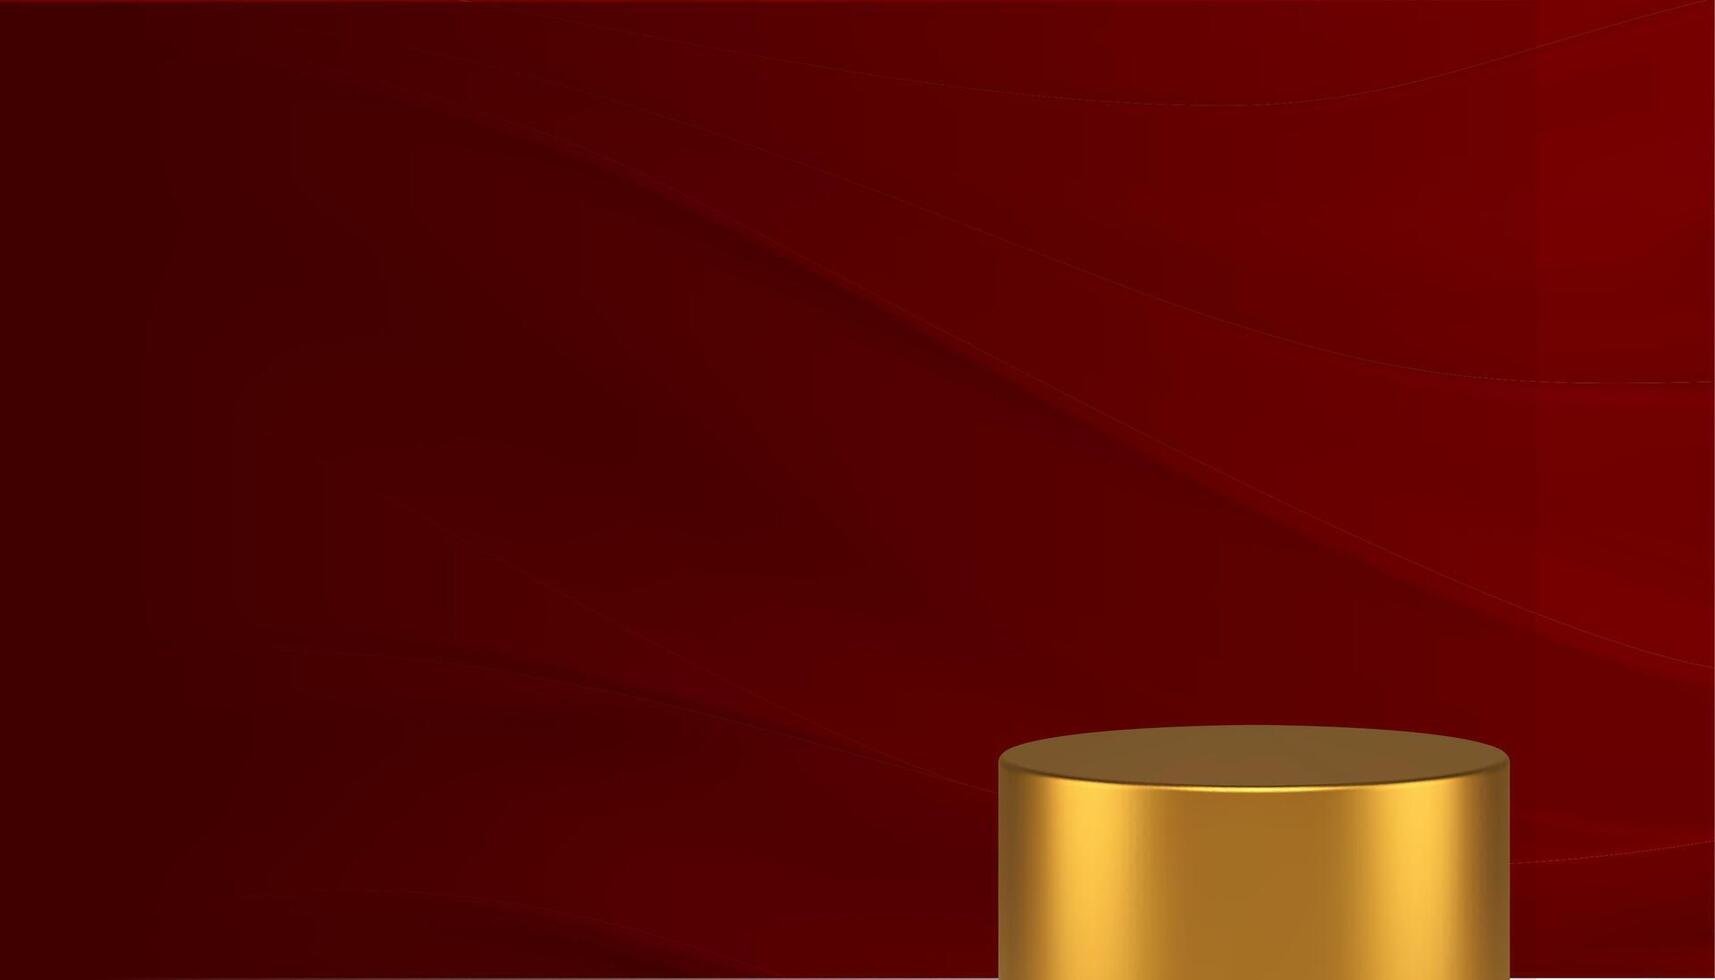 Cylinder golden 3d podium pedestal elegant curved wave red wall background realistic vector